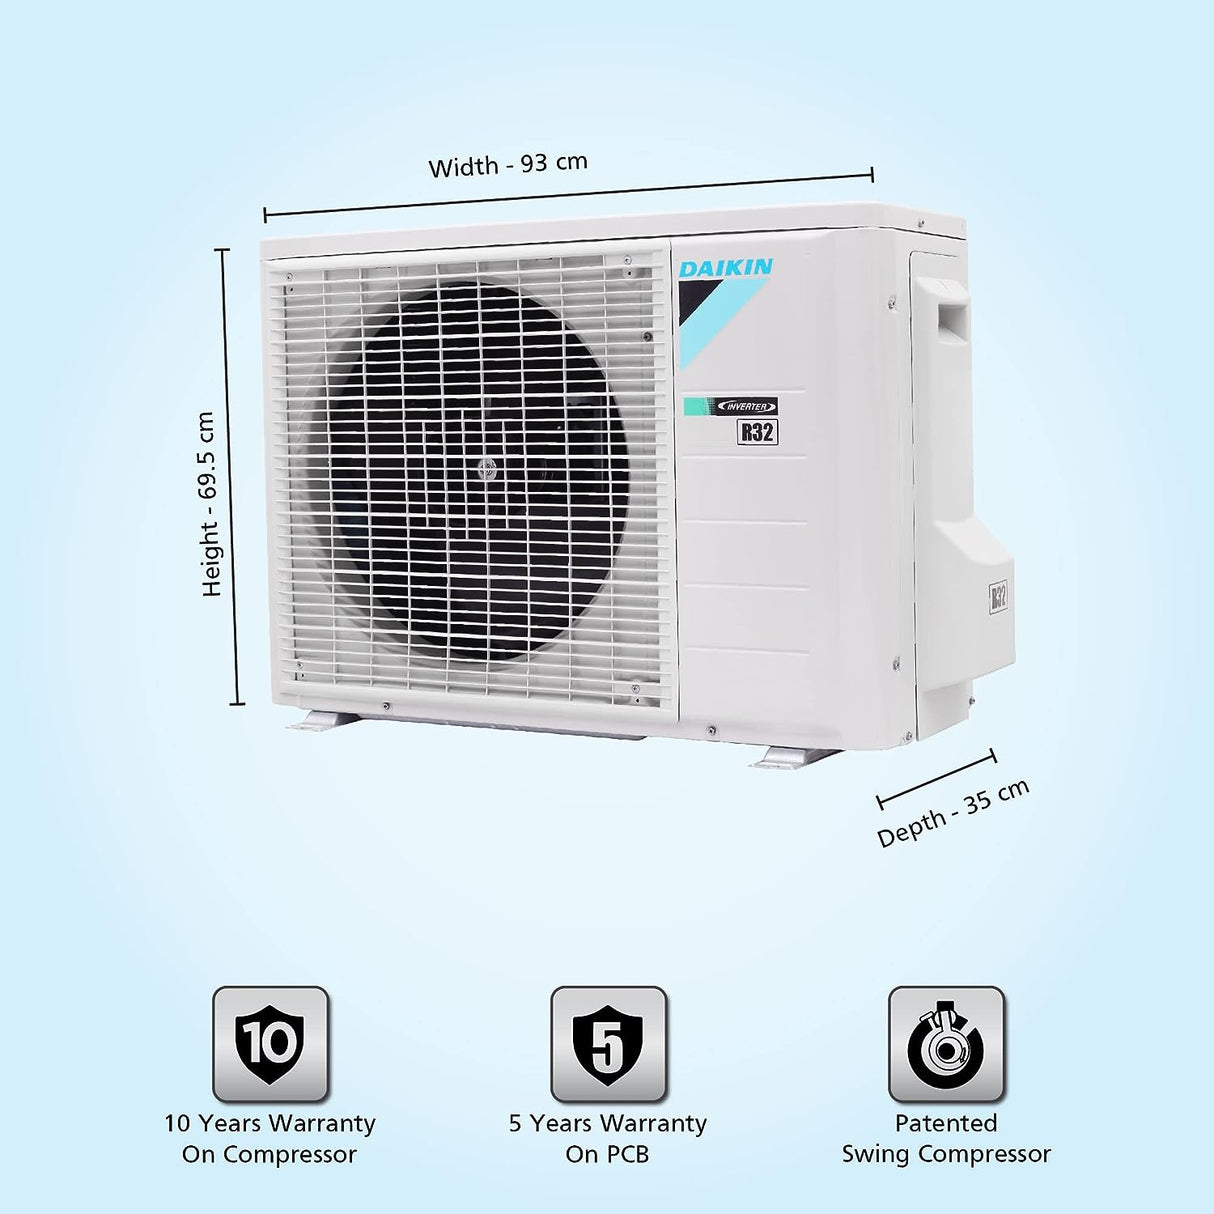 Top Air Conditioner: Daikin 1.8T 5 Star Inverter Split AC - Copper, 2022 Model, White.